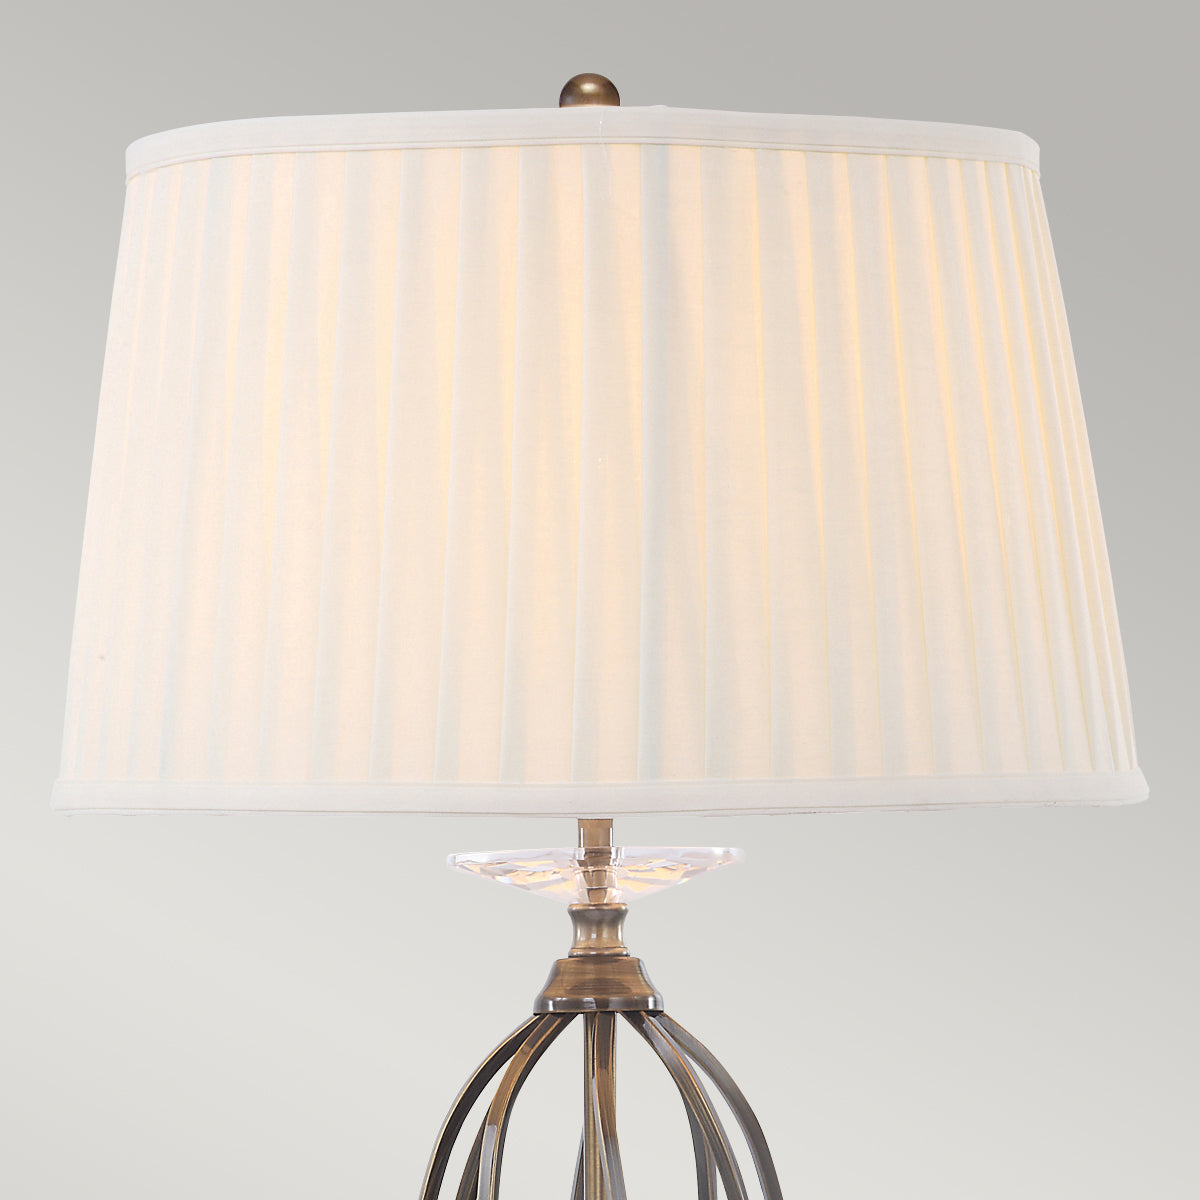 Aegean Light Table Lamp - Aged Brass